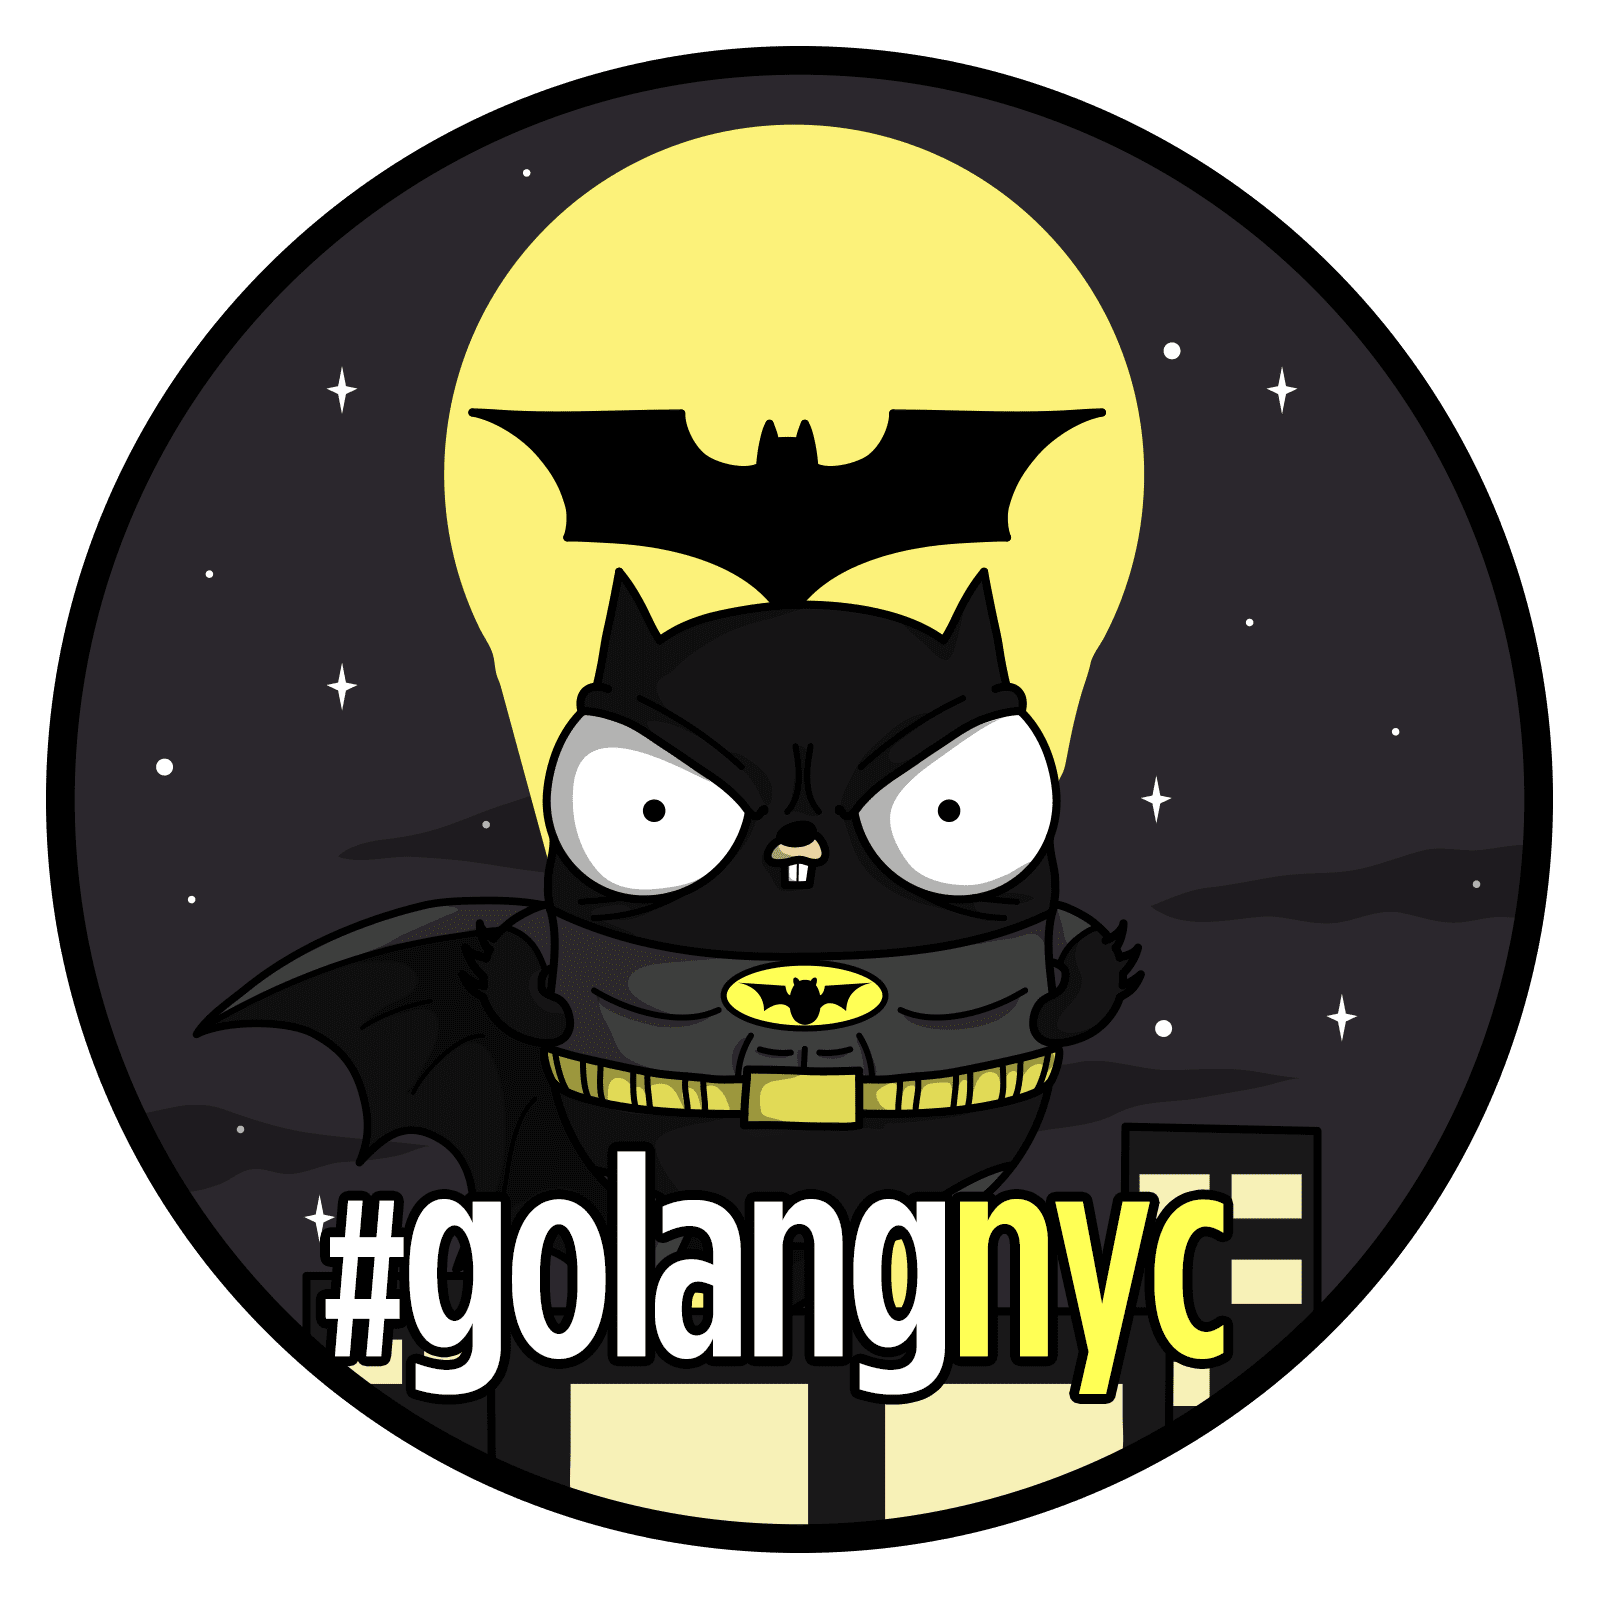 Golang NYC (New York) Meetup